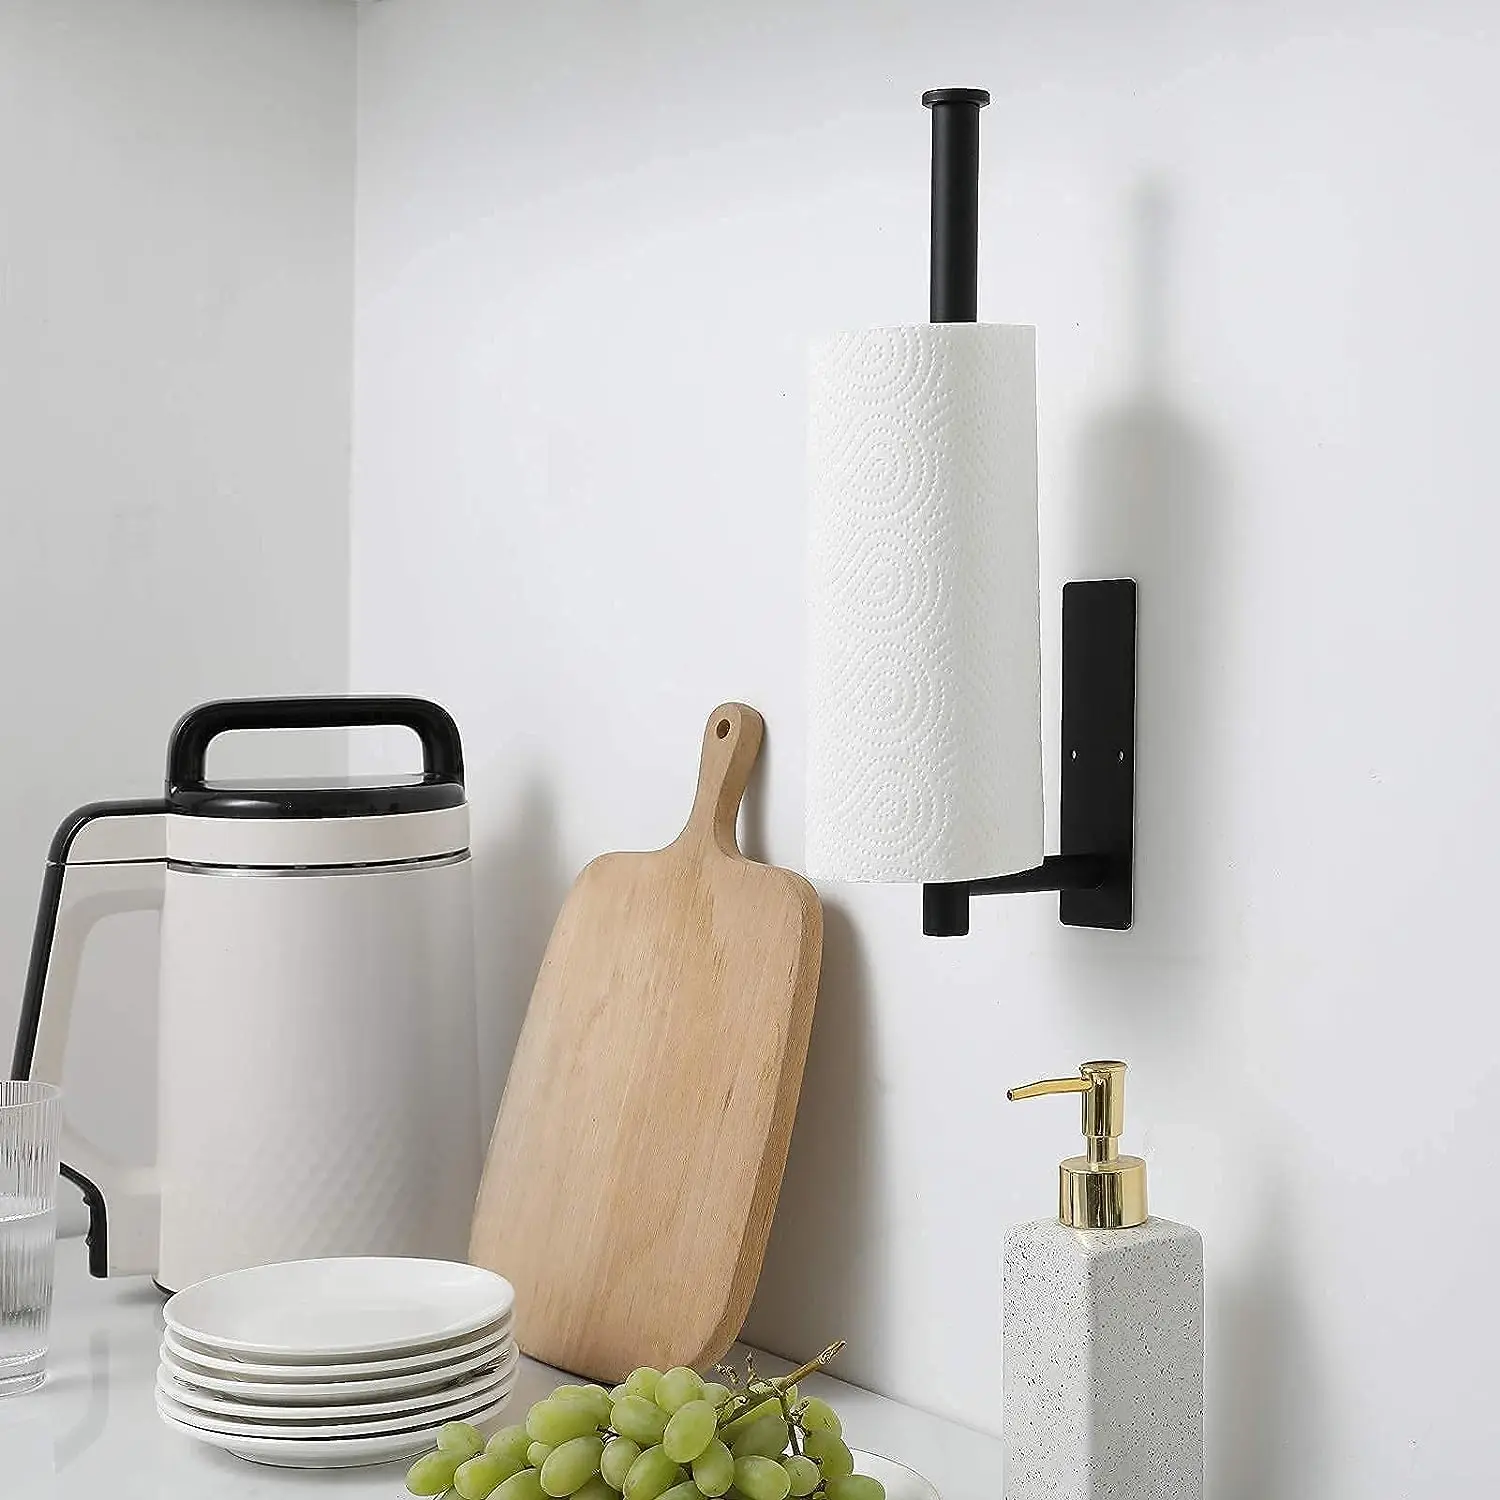 Kitchen Paper Towel Holder, Adhesive, Bathroom Towel Bar, No Drill Towel  Holder, Bathroom Paper Roll Holder - AliExpress